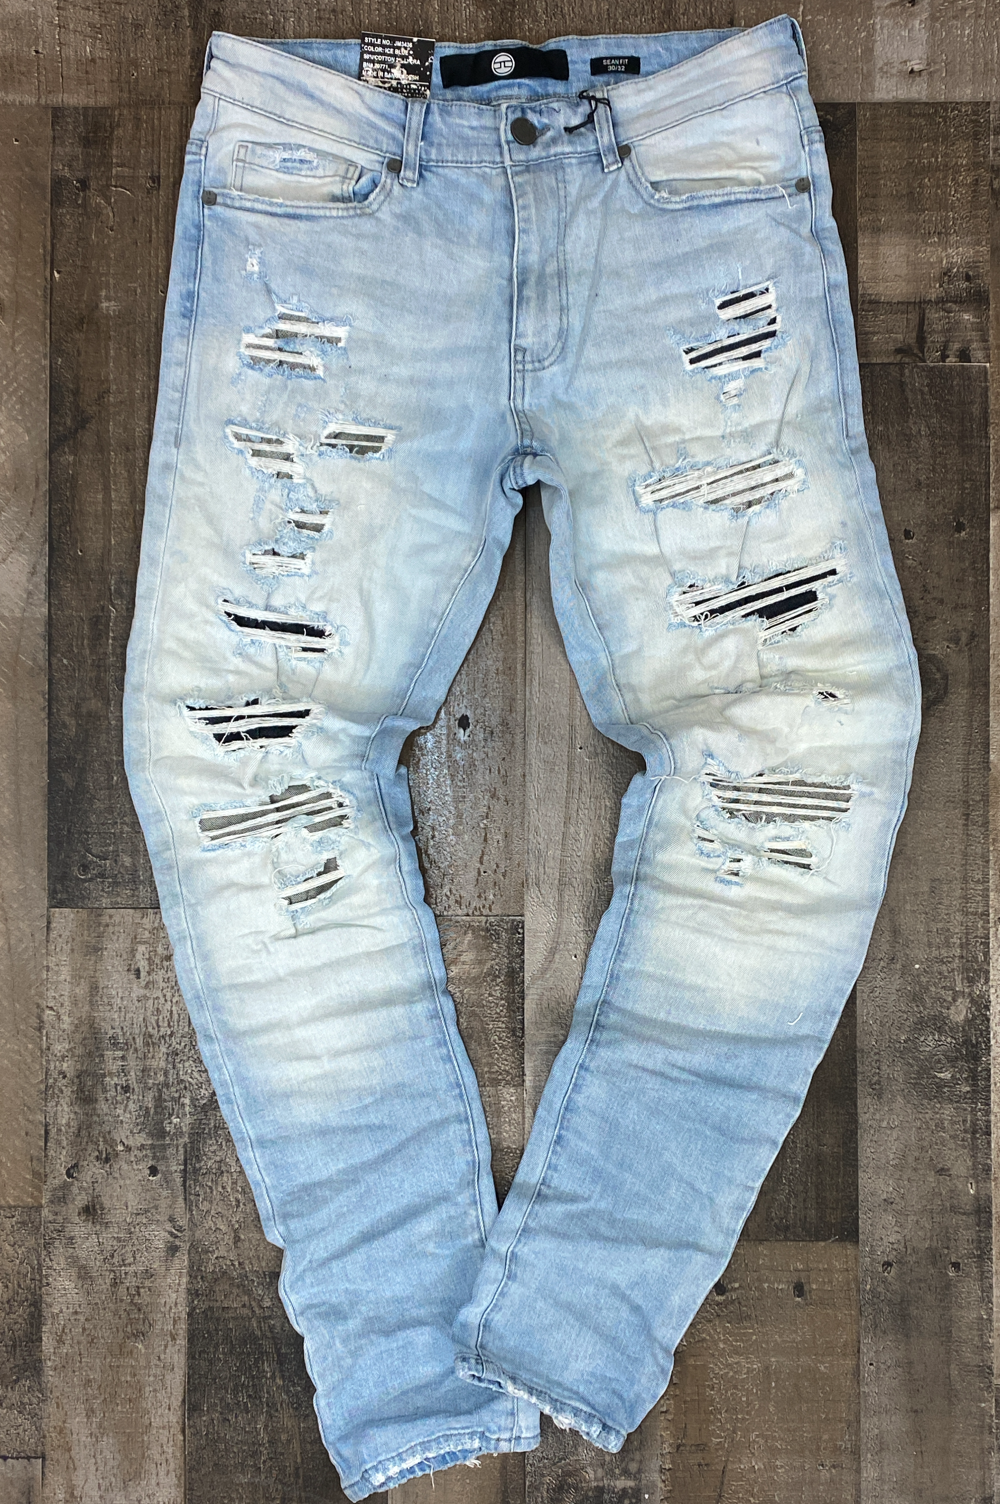 Jordan Craig- crinkled denim jeans w shreds (Sean)